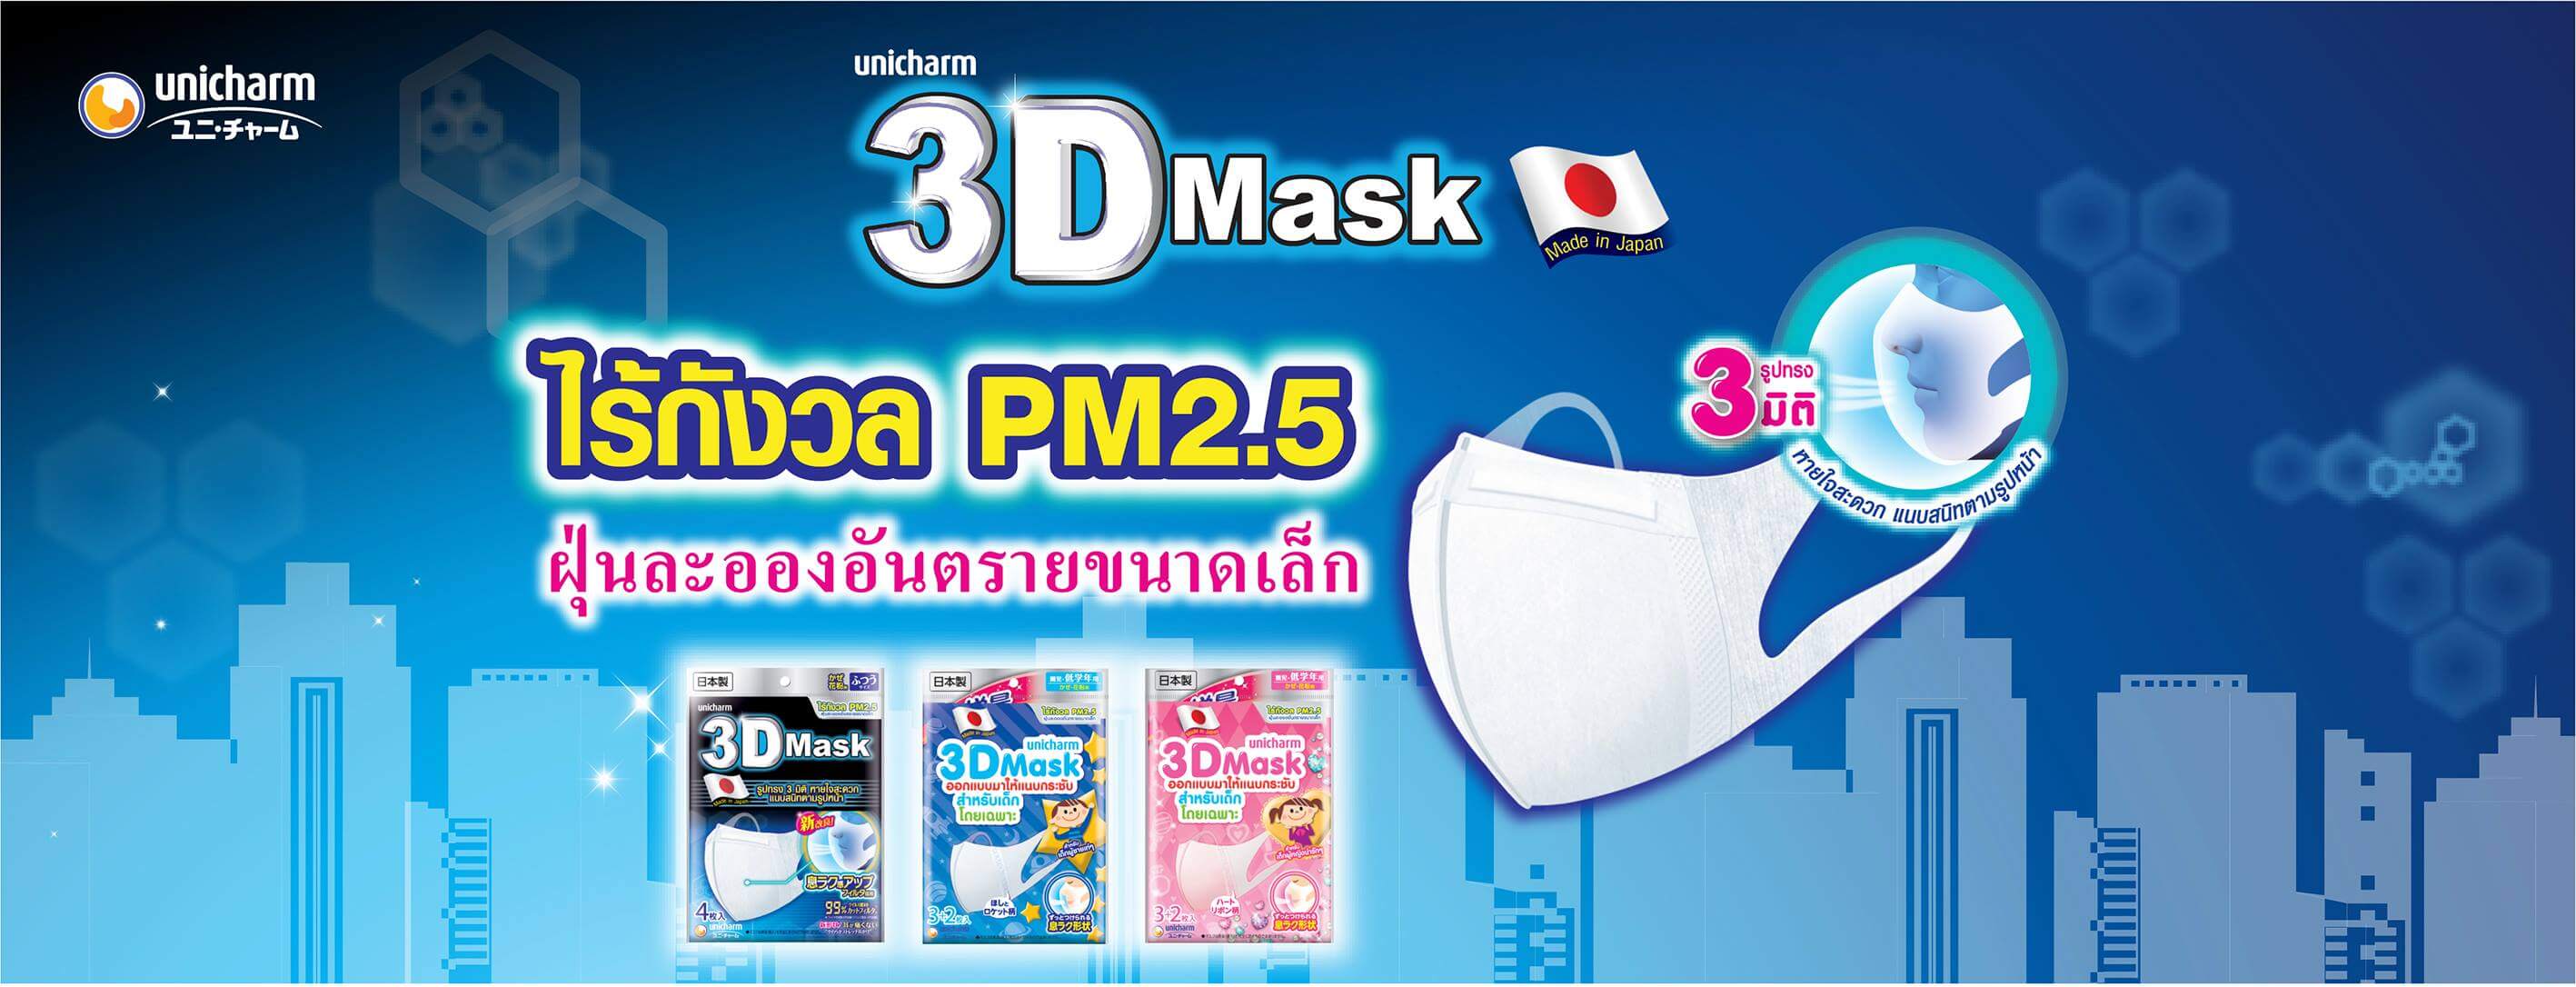 Unicharm - Super 3D Mask Virus Guard (Small) 1 ซอง มี 4 ชิ้น หน้ากากอนามัย ป้องกันฝุ่นละอองอันตราย PM 2.5 ได้ถึง 99% ใส่สบาย กระชับหน้า ไม่ปวดหู ระบายอากาศได้ดี